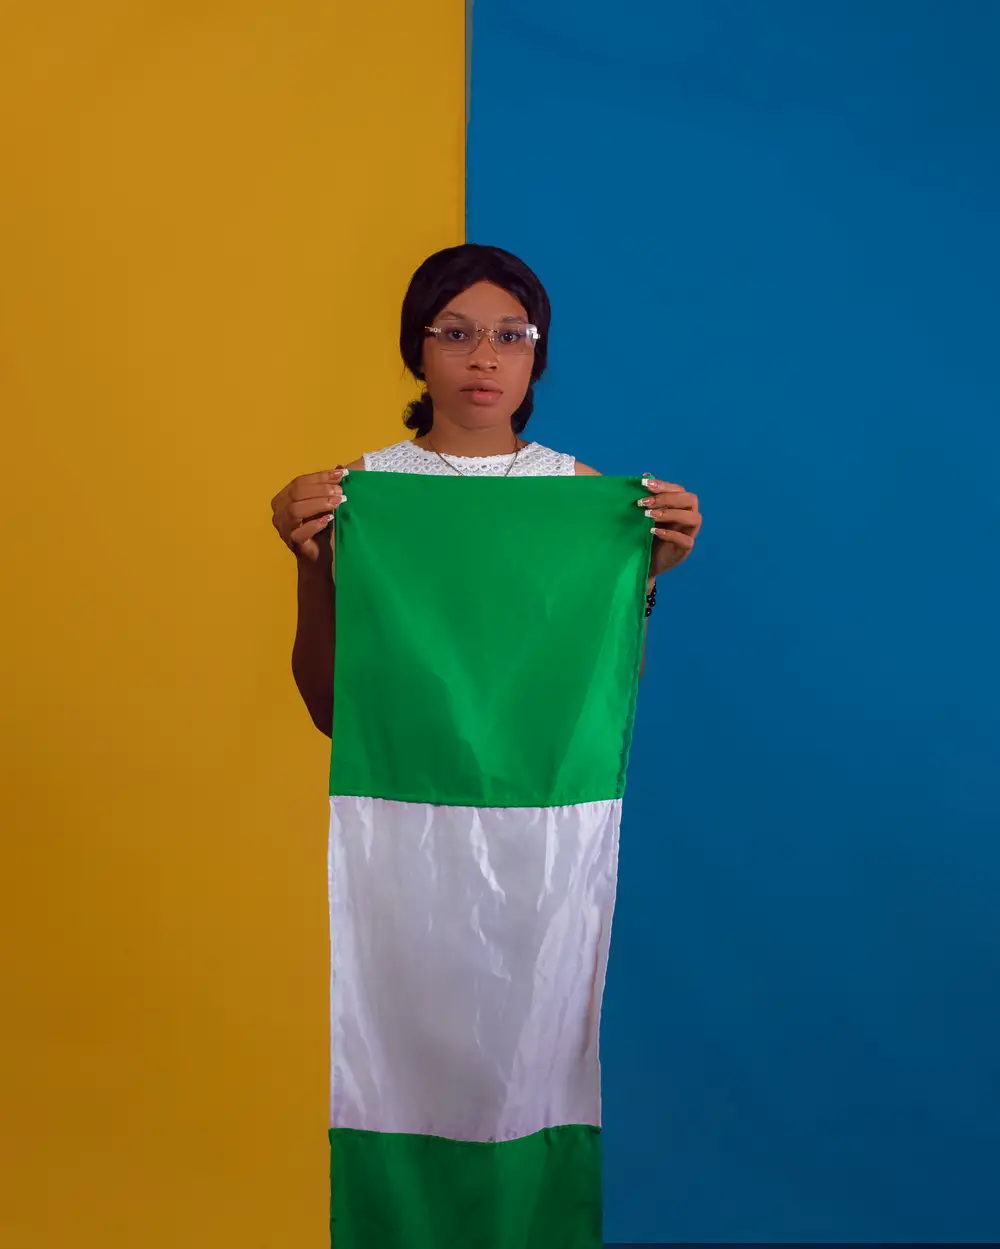 A Nigerian photoshoot with Ukrainian flag background